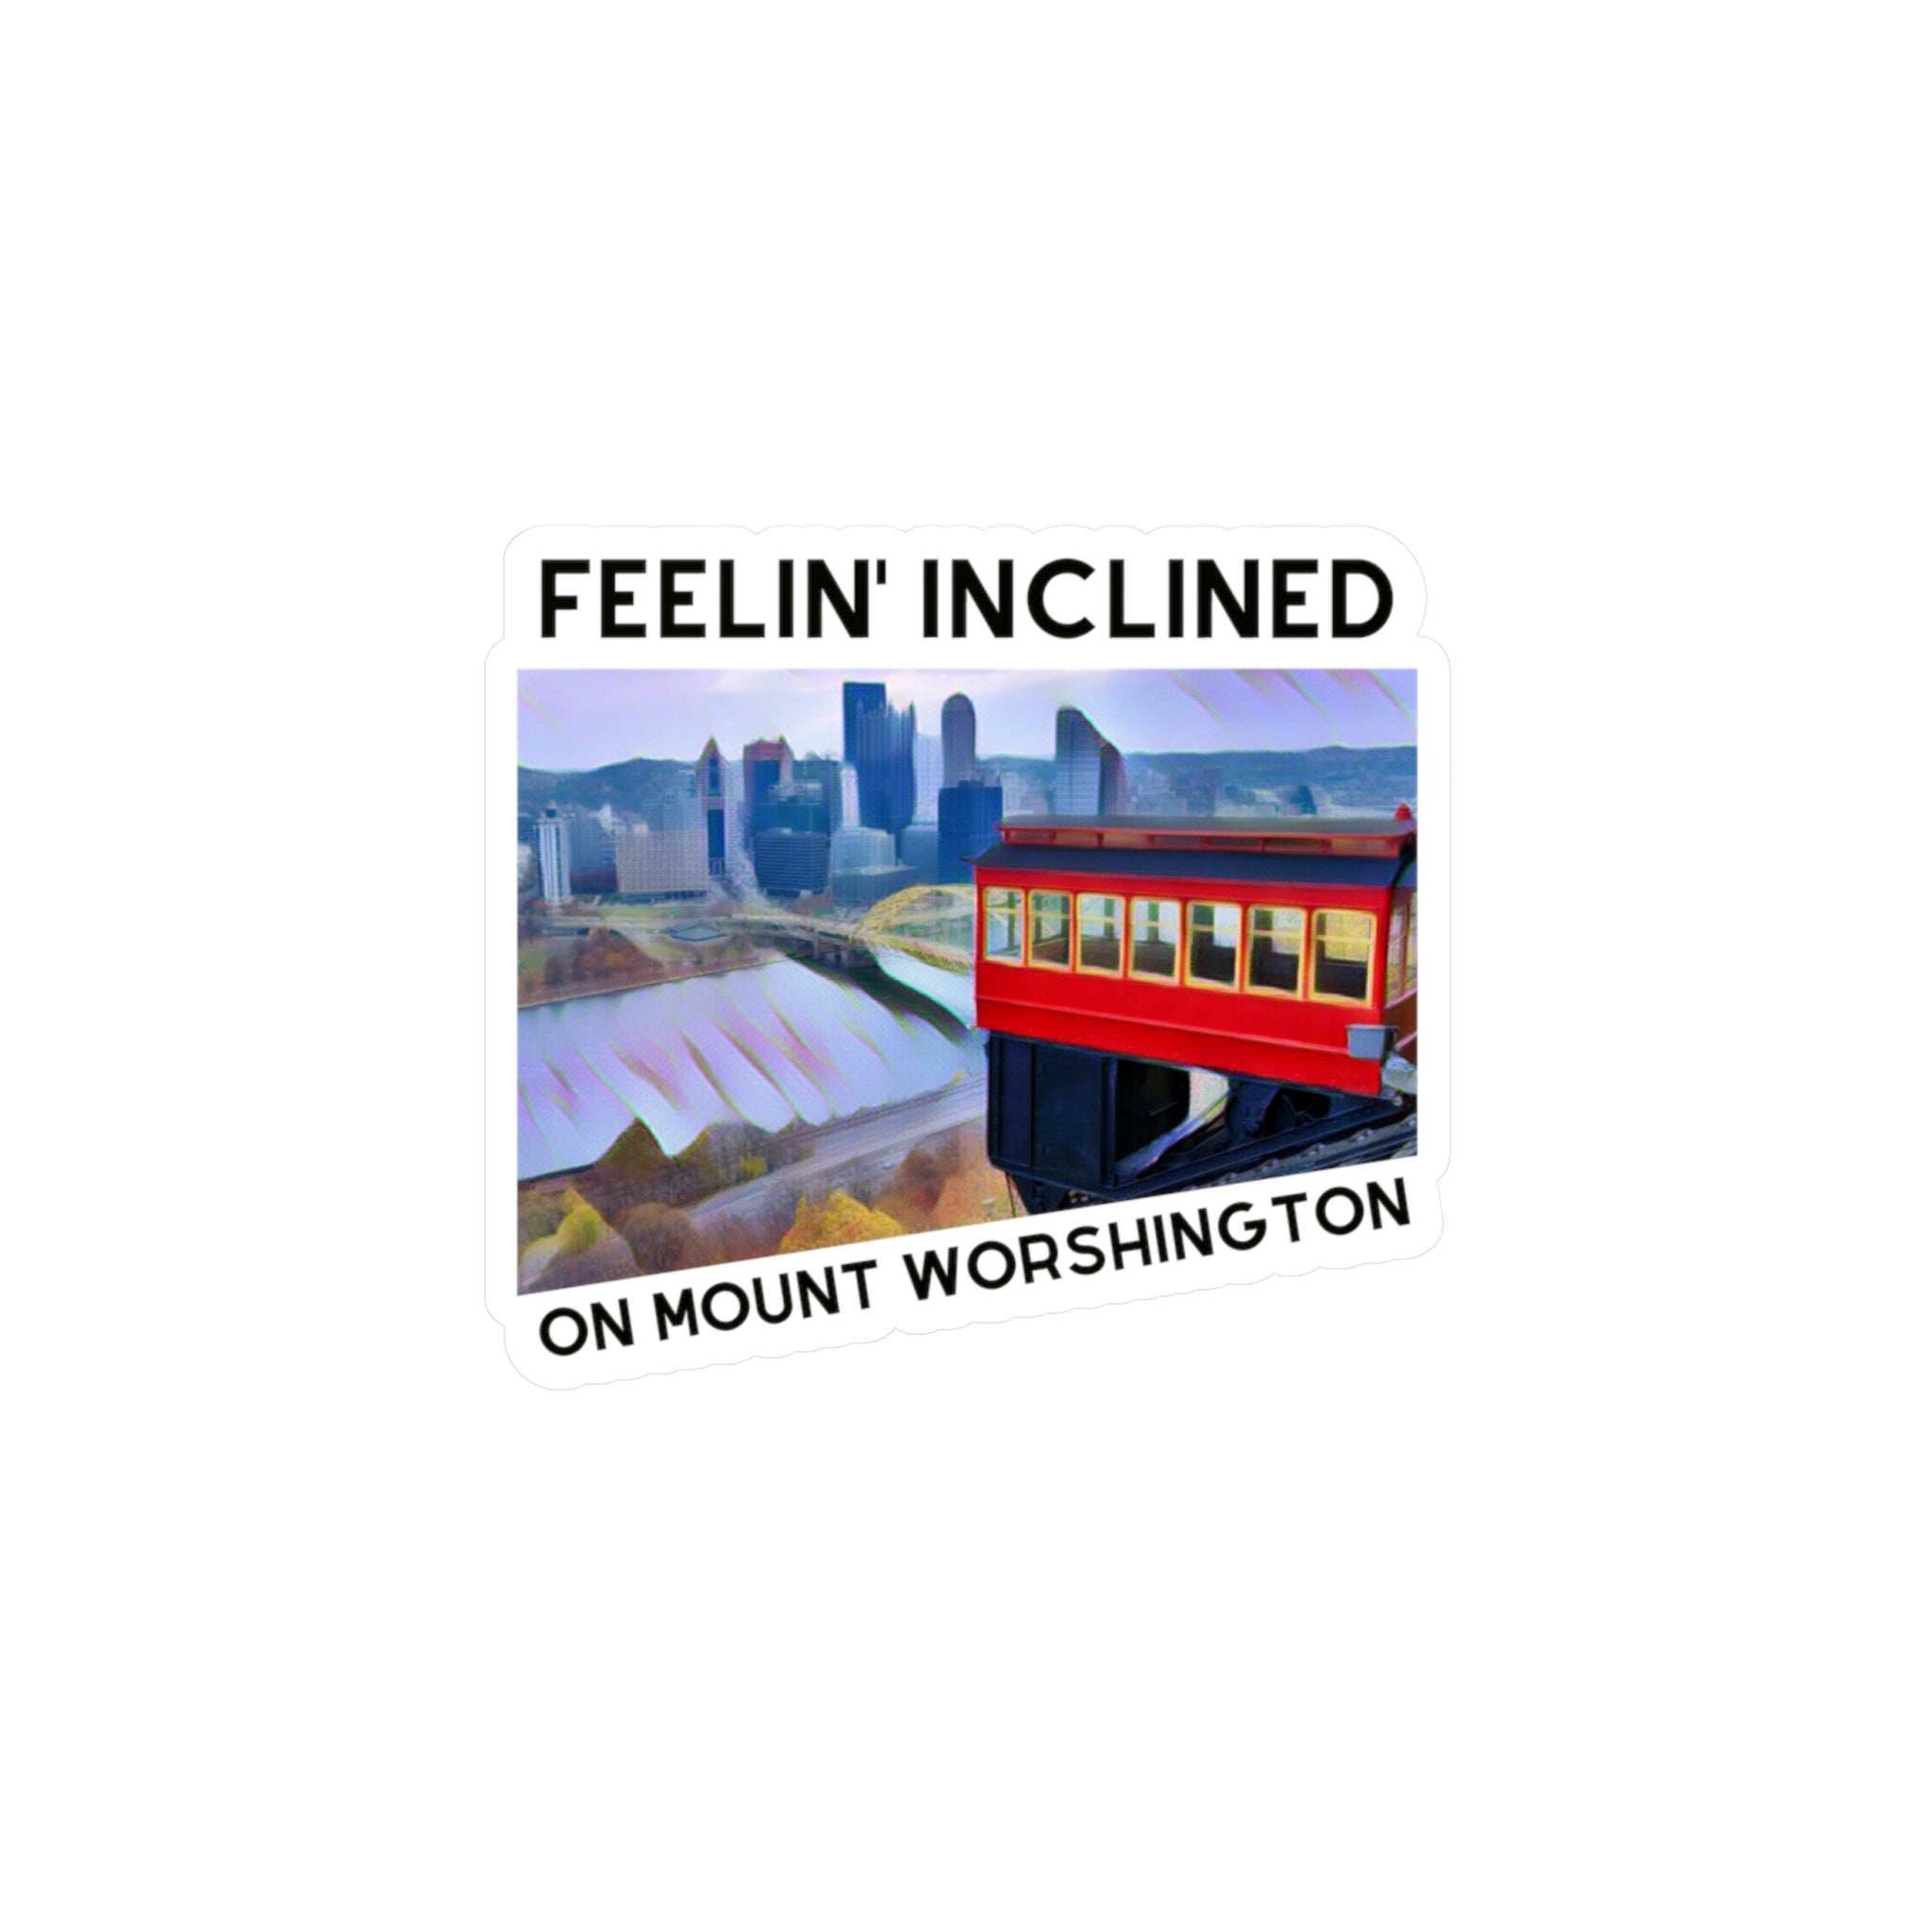 Feelin' Inclined on Mt. Worshington - Kiss-Cut Vinyl Decals - Yinzylvania